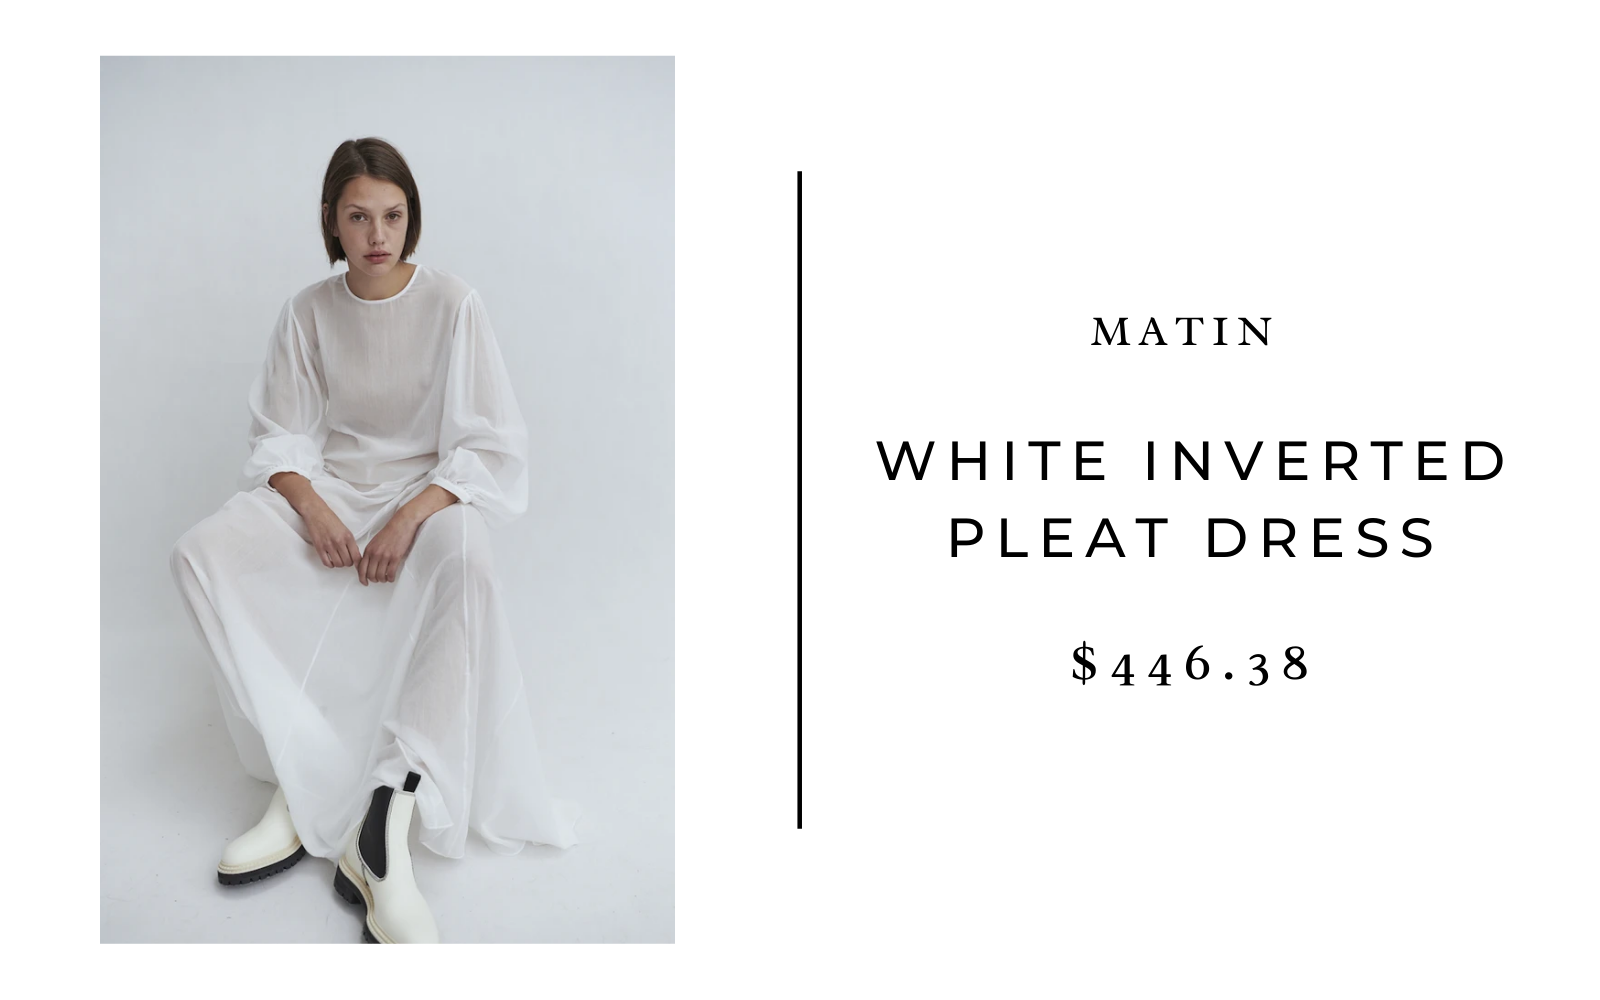 Martin White Inverted Pleat Dress